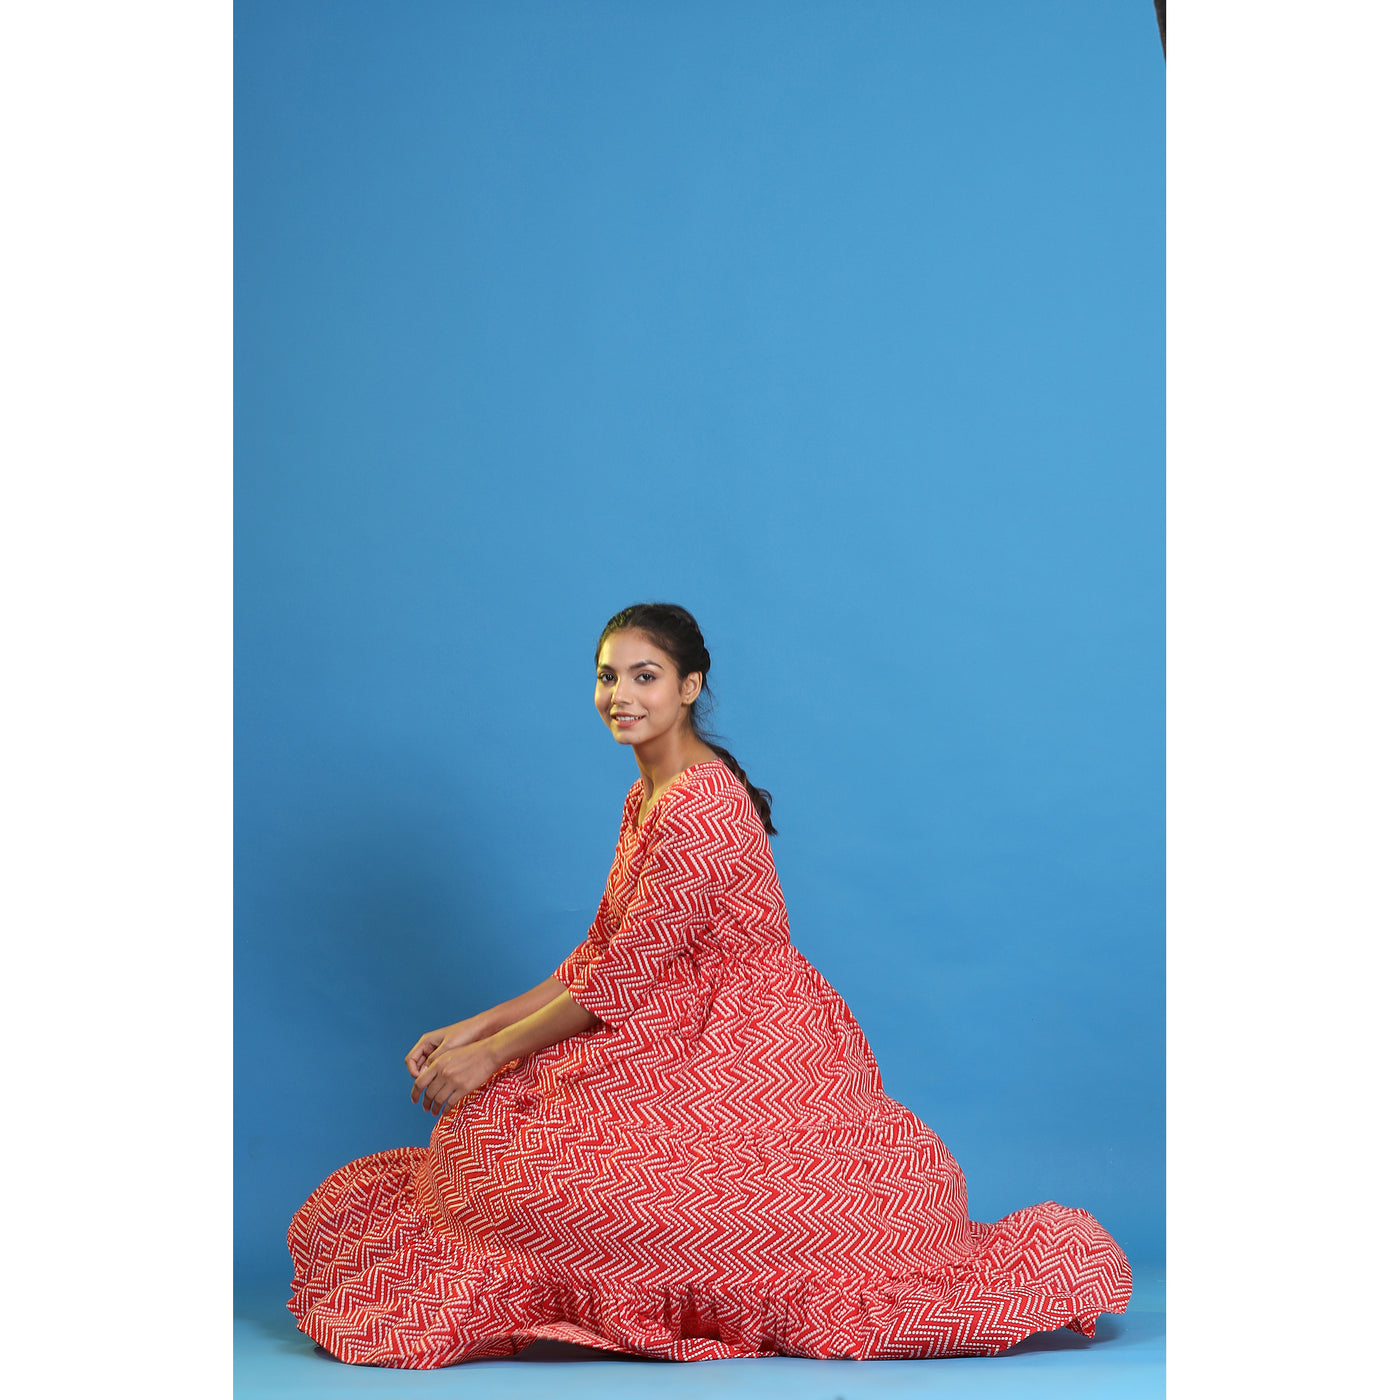 Patterned Bhandej on Red Feeding Maternity Midi Dress